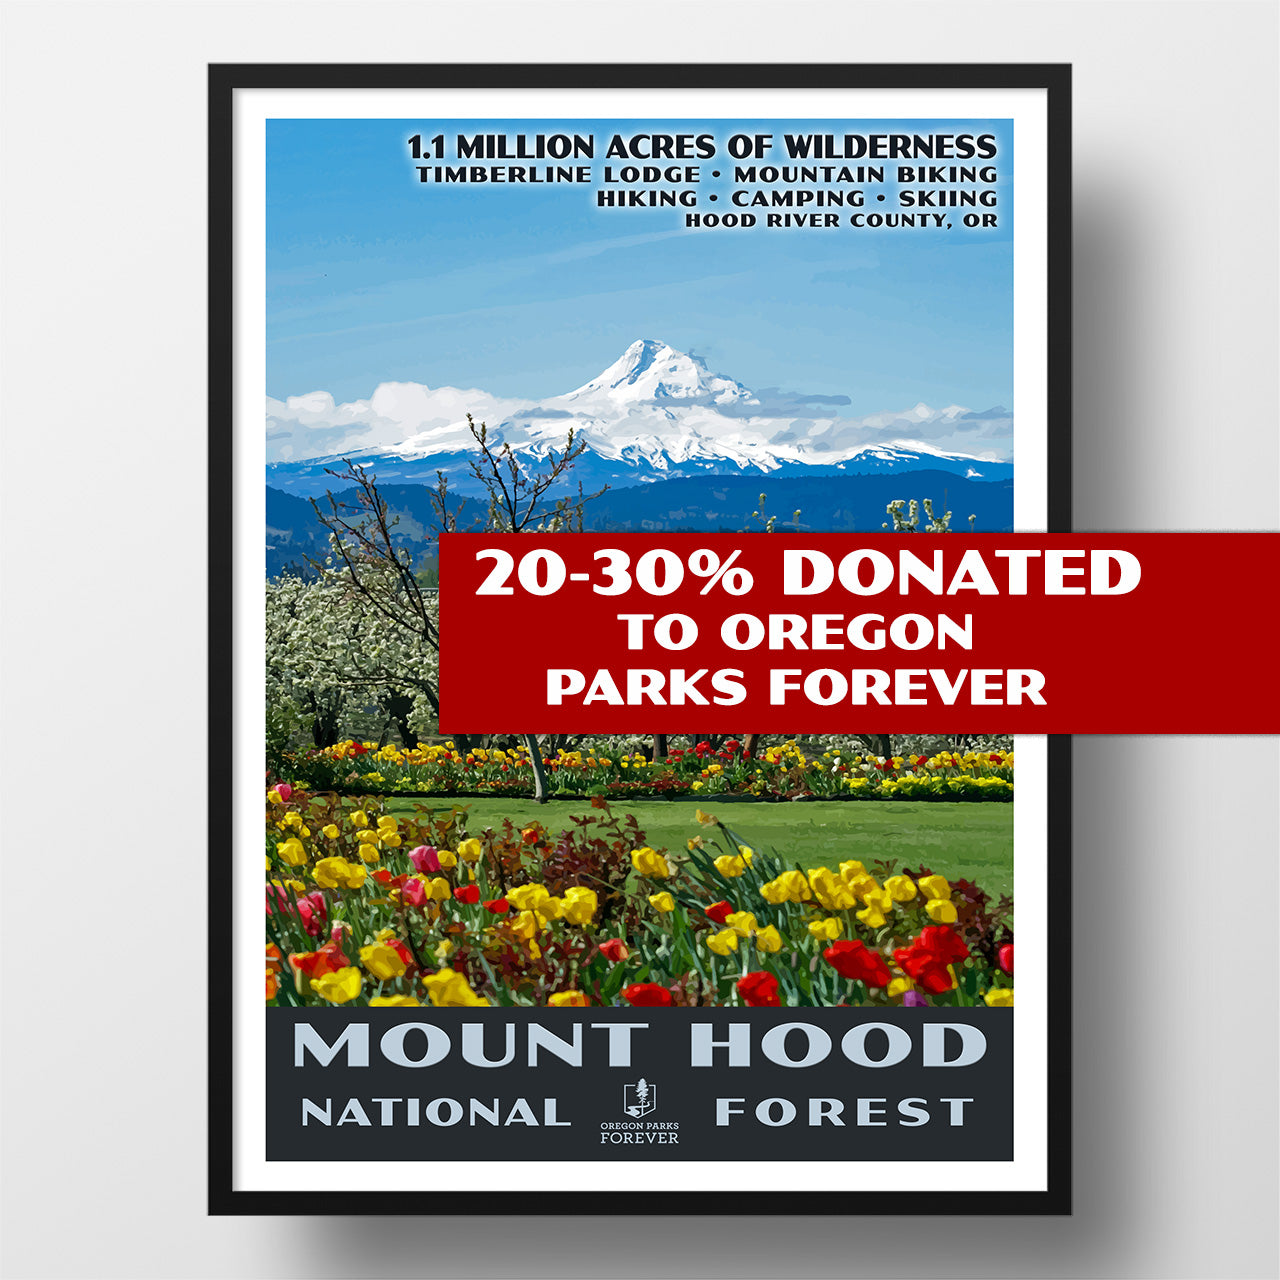 Mount Hood National Forest poster